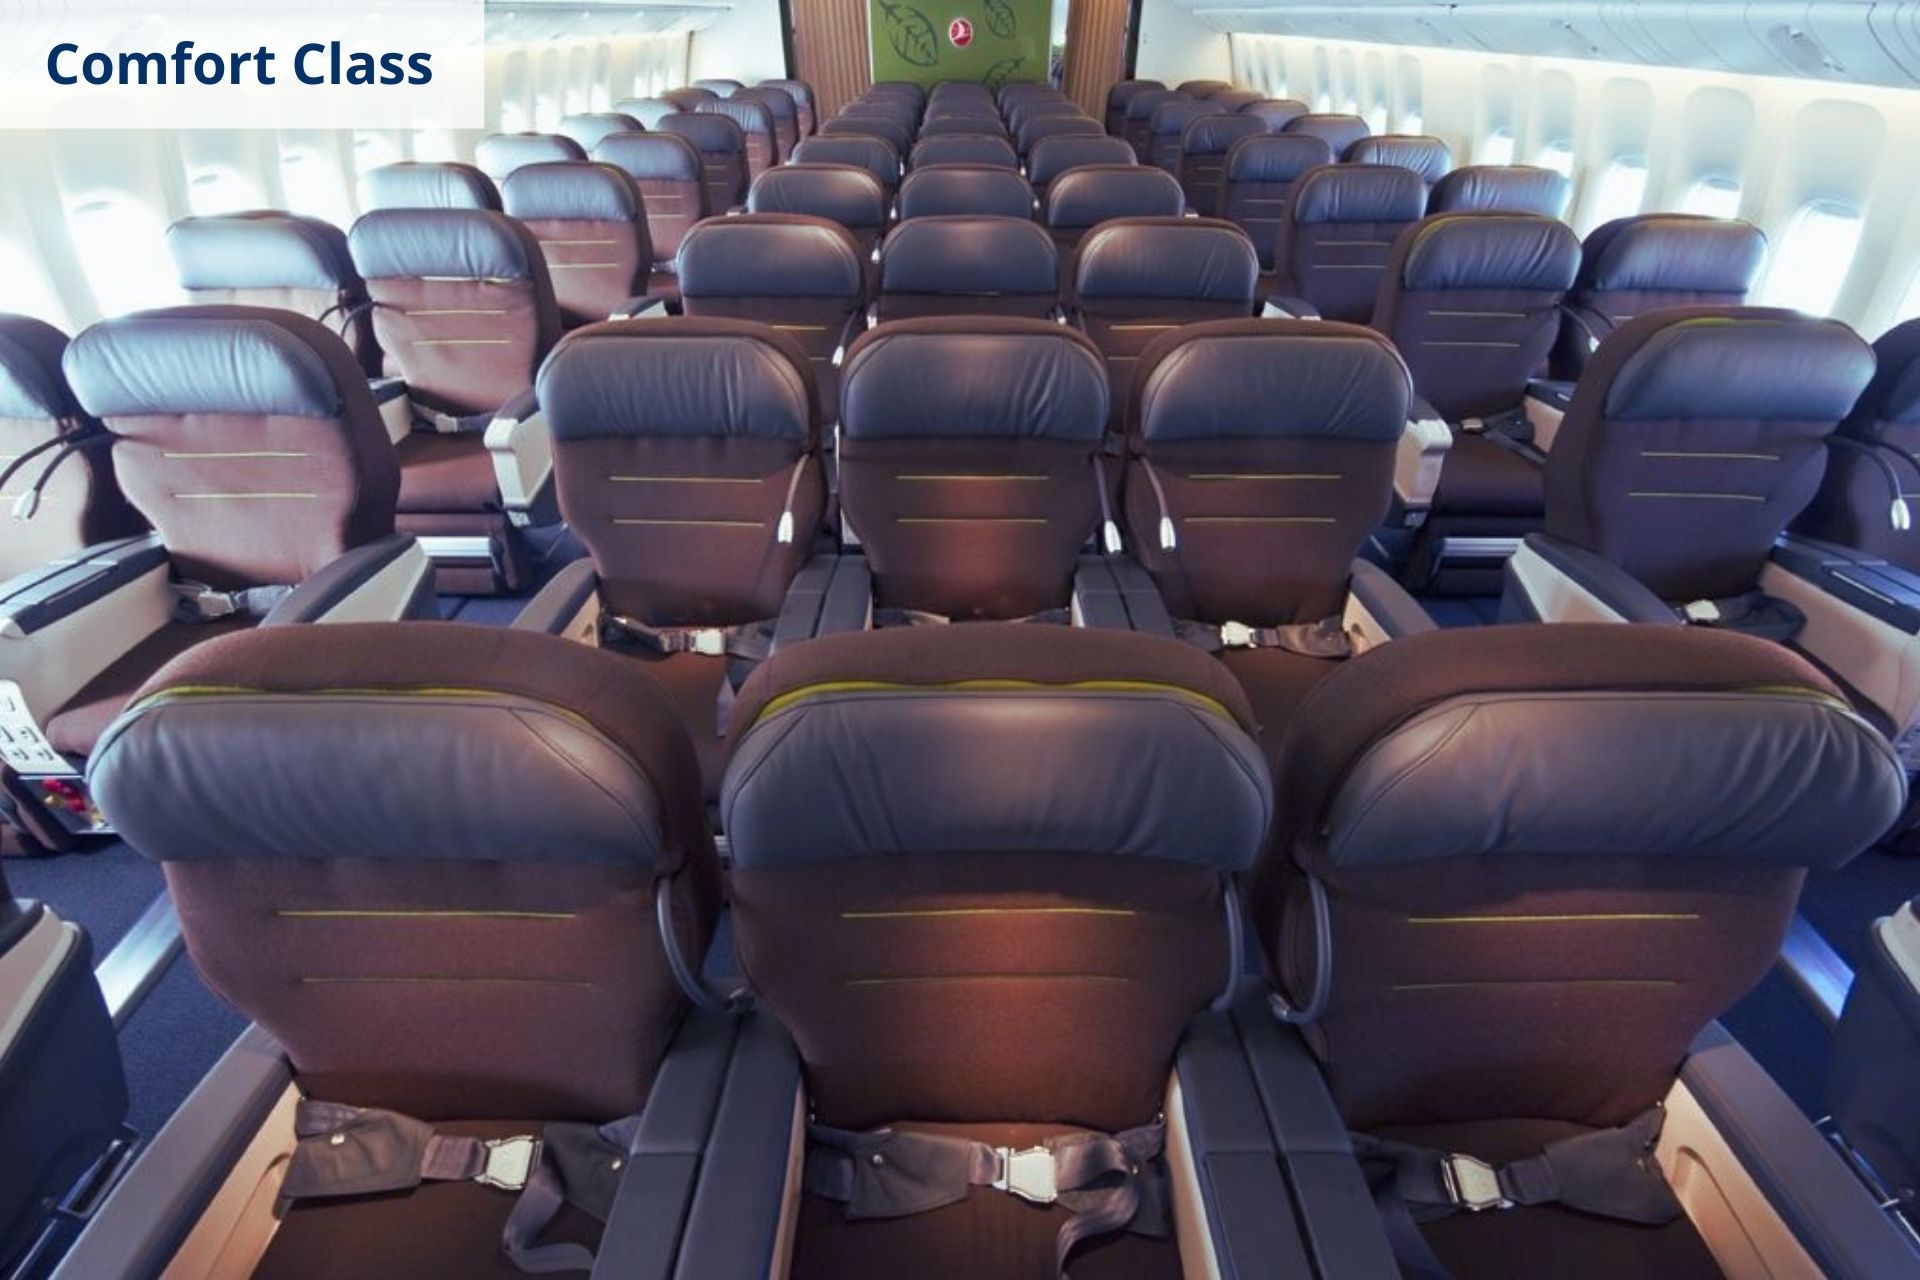 Turkish Airlines comfort class